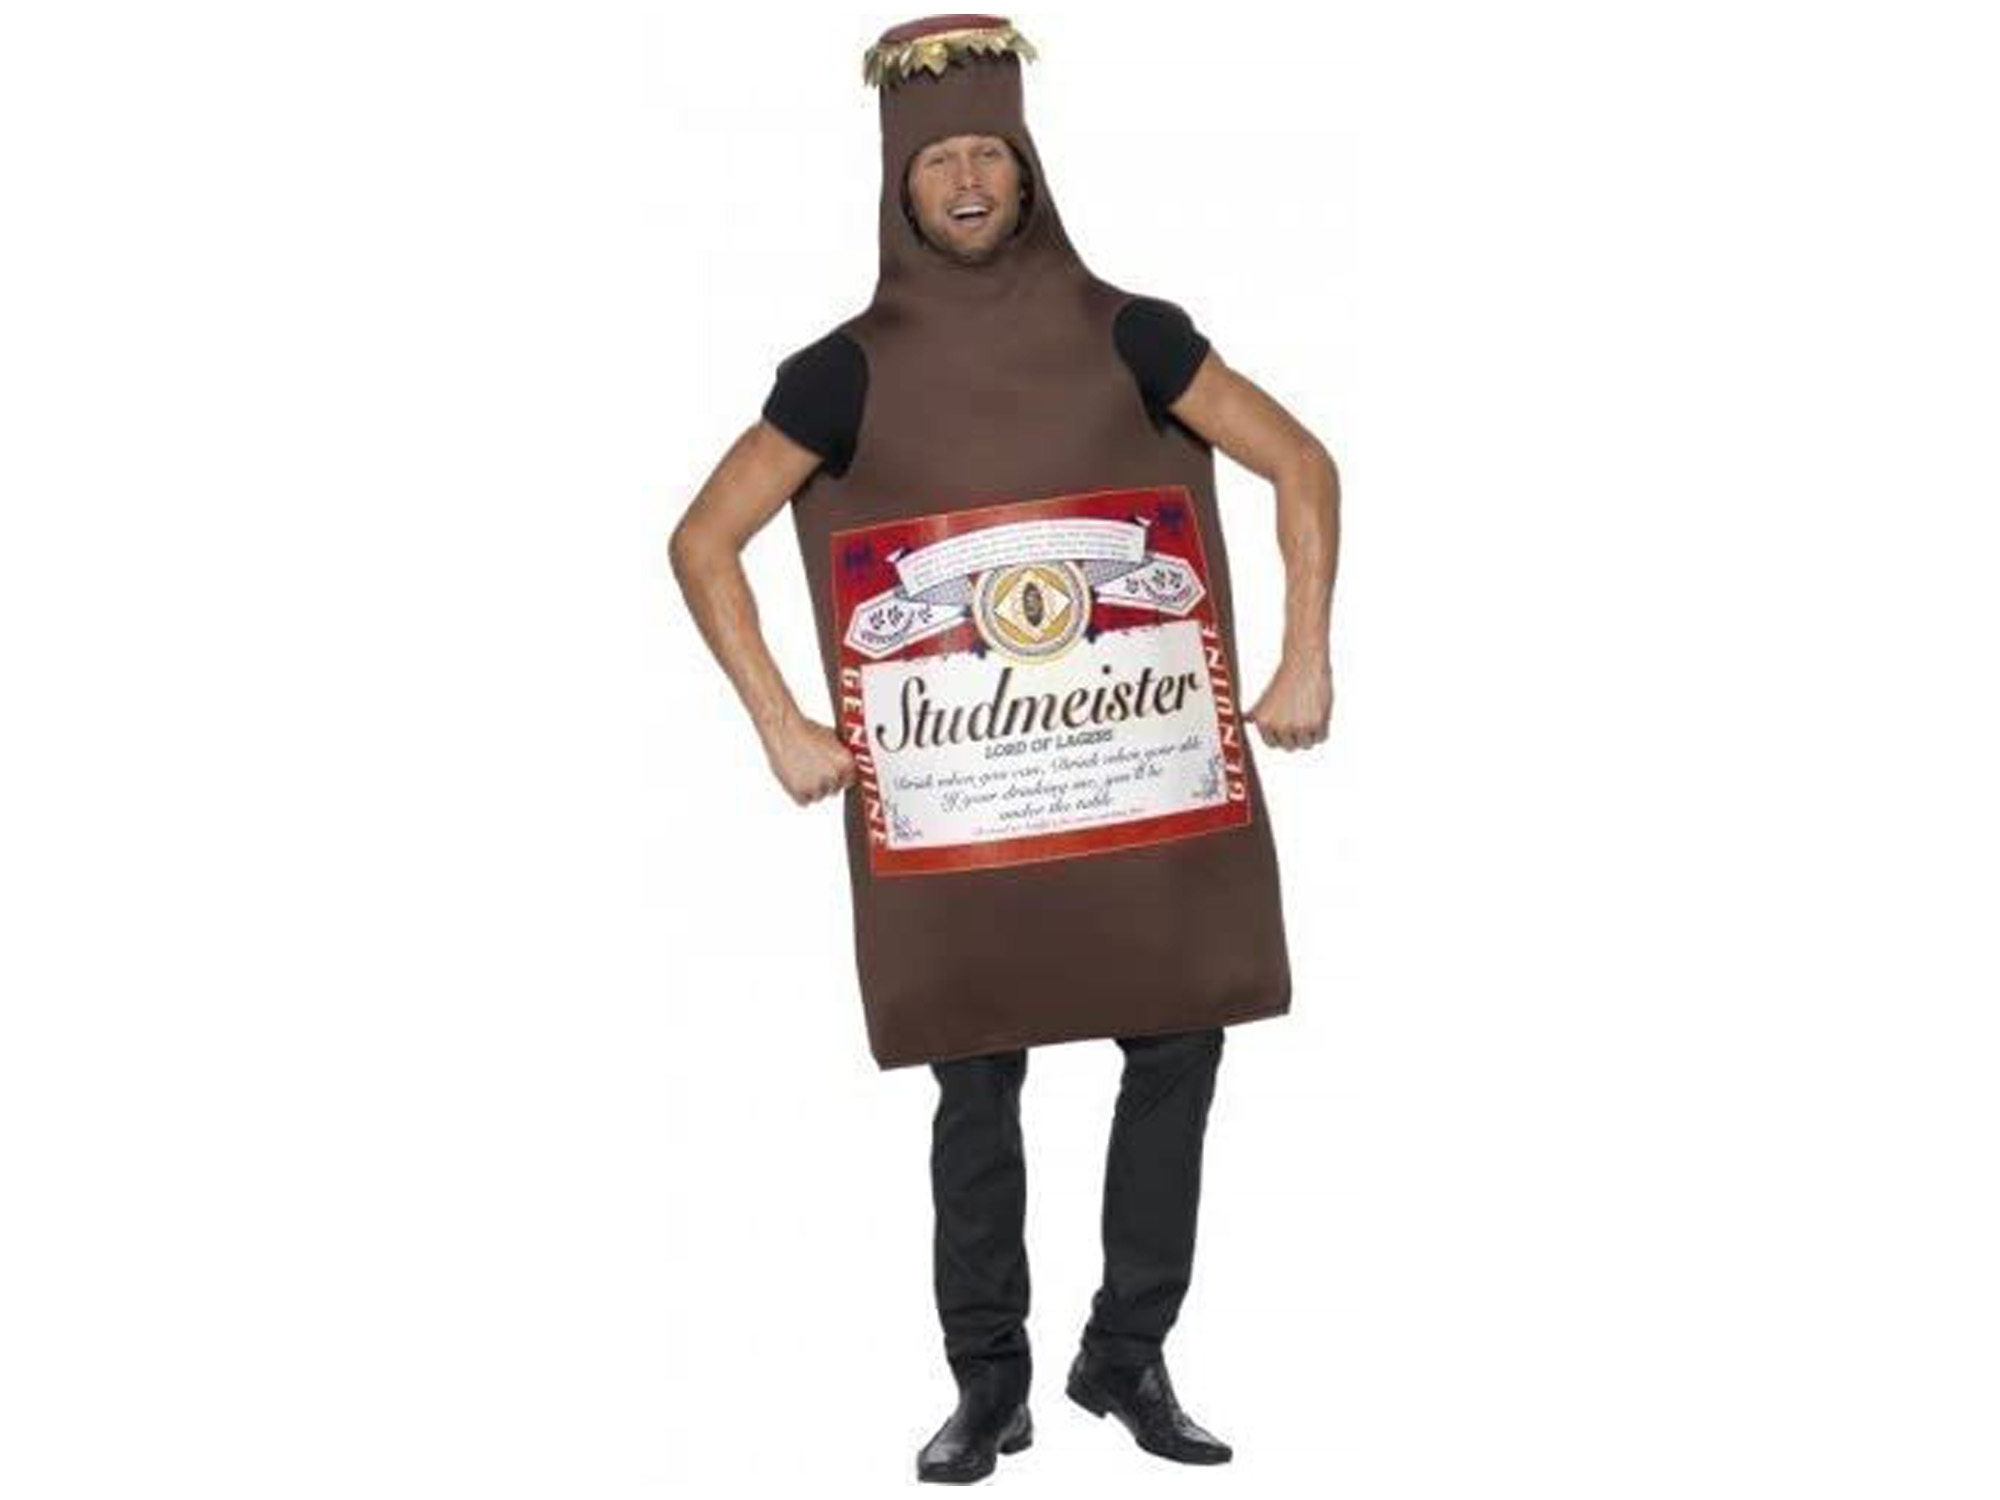 Studmeister Beer Bottle Costume - Amazon